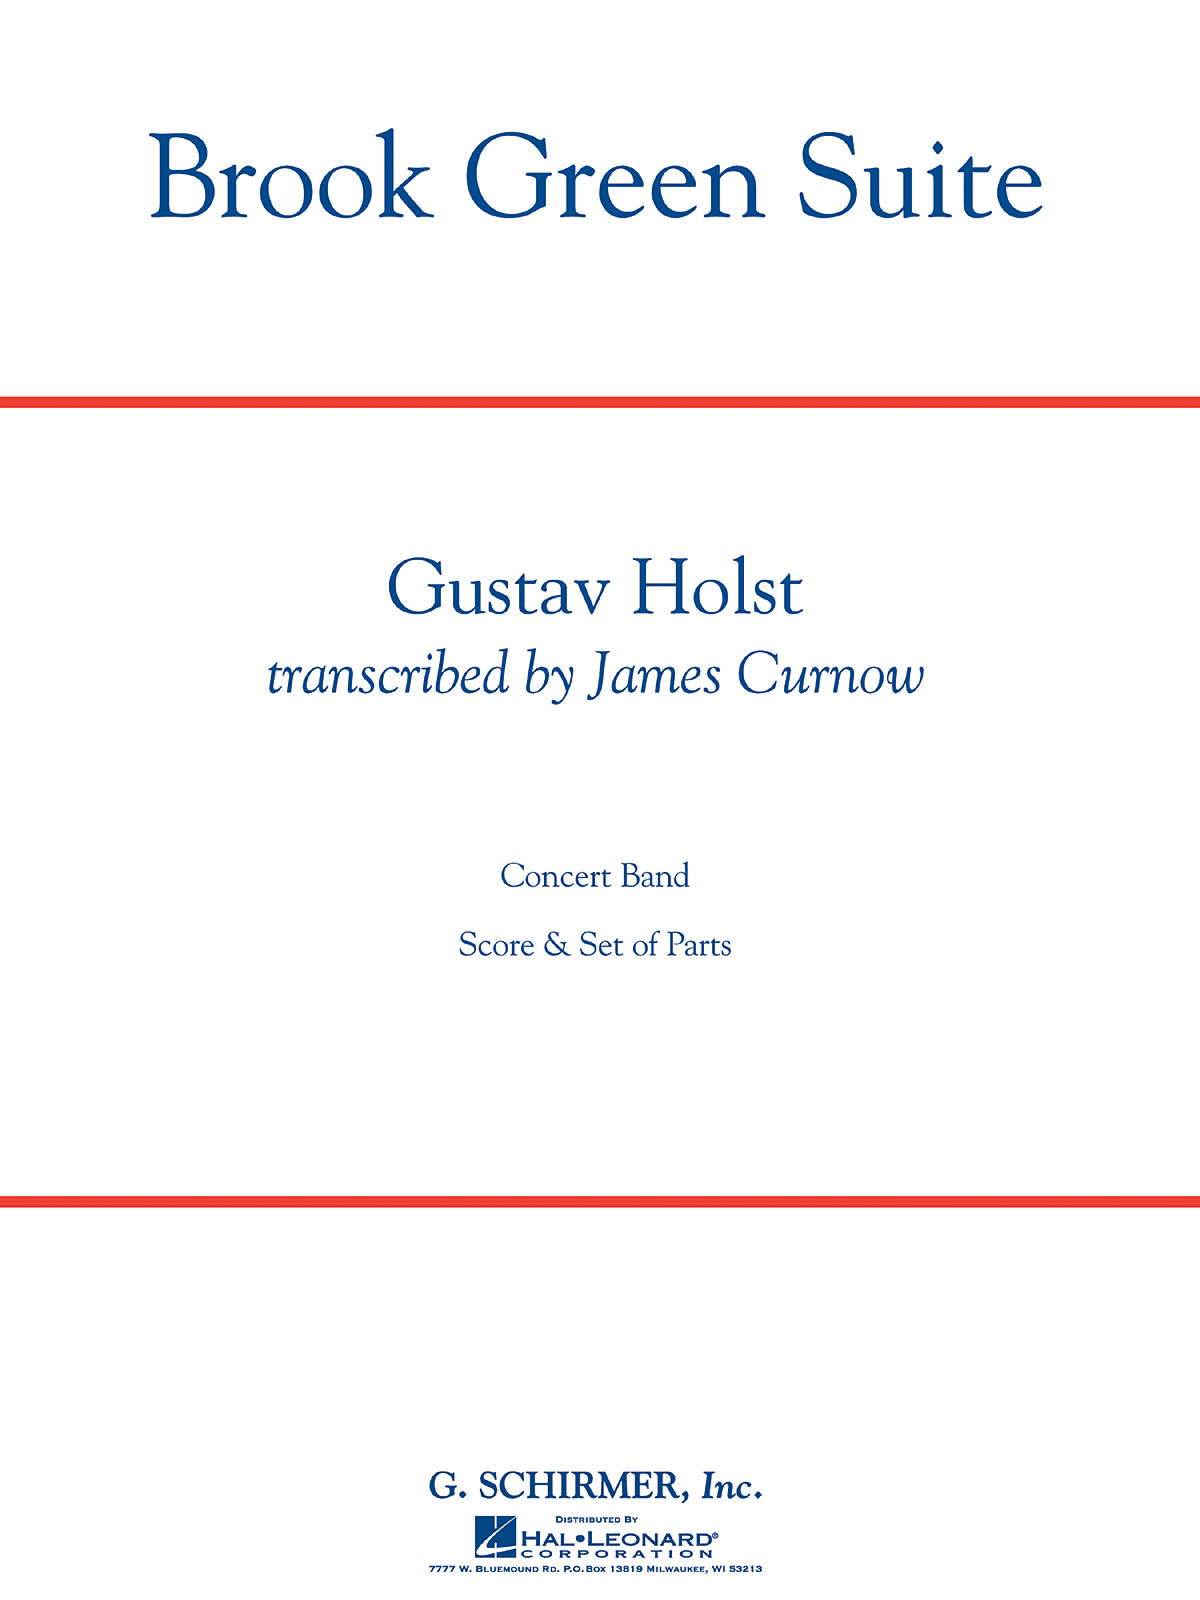 Gustav Holst: Brook Green Suite: Concert Band: Score & Parts